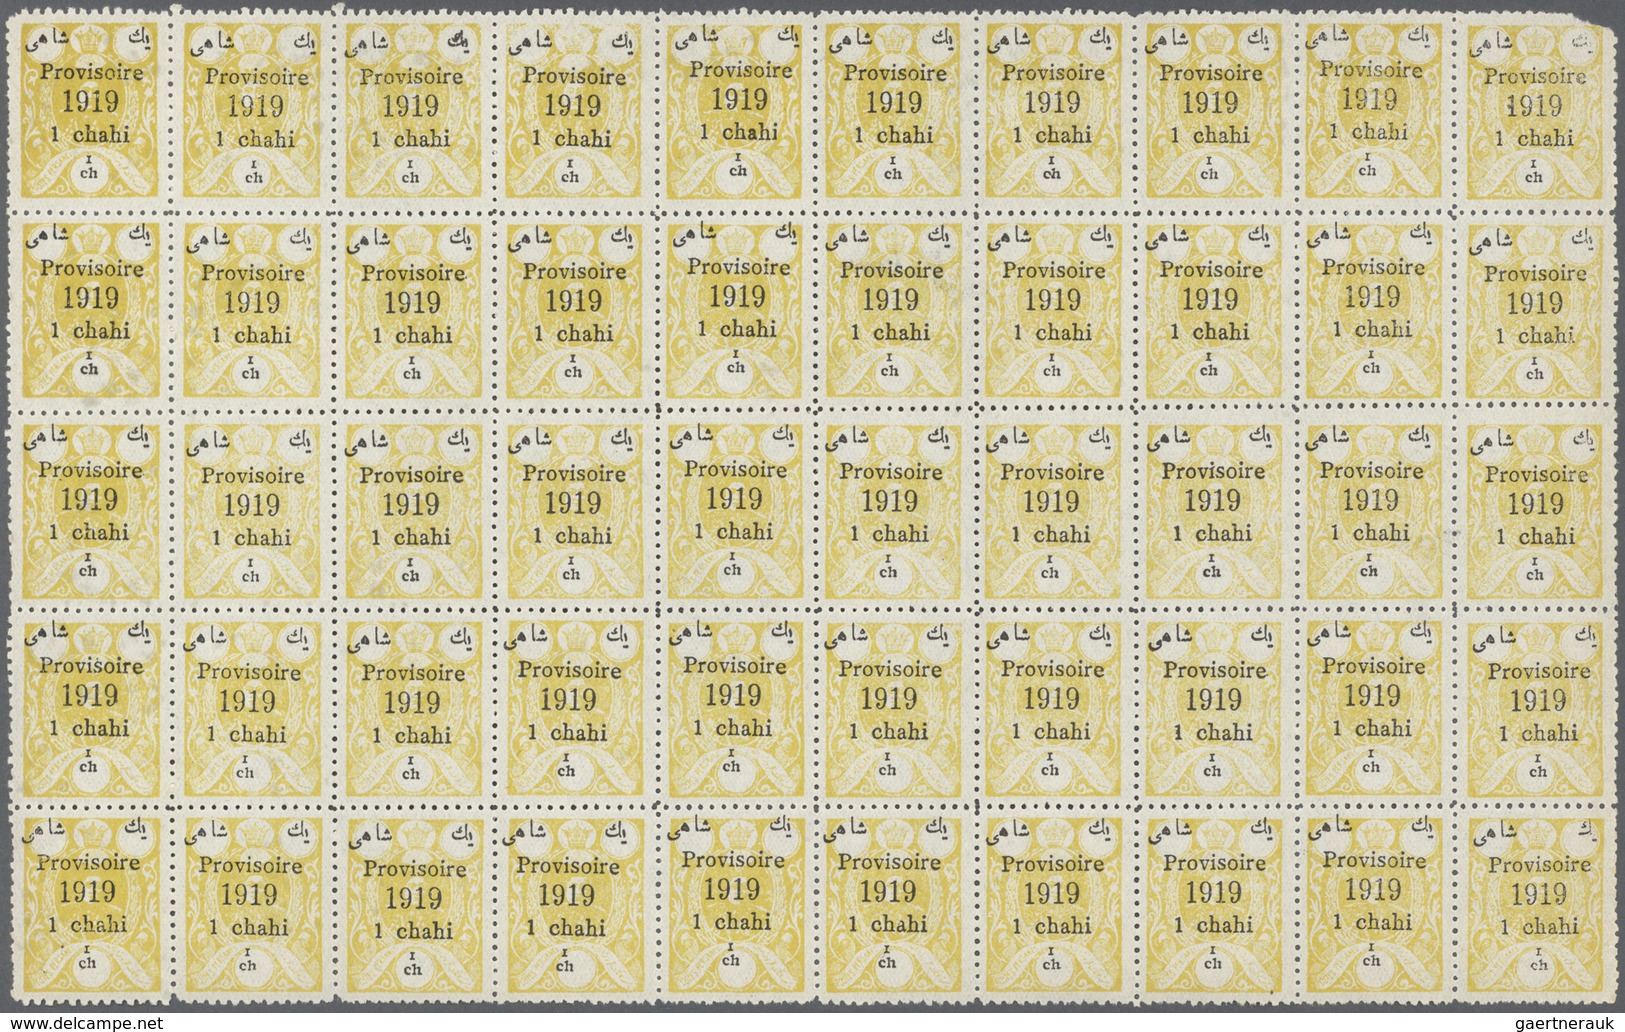 ** Iran: 1919. The Zinc Plate Provisional issue Yvert 412 to 416 with overprint 'Provisoire 1919' inn b